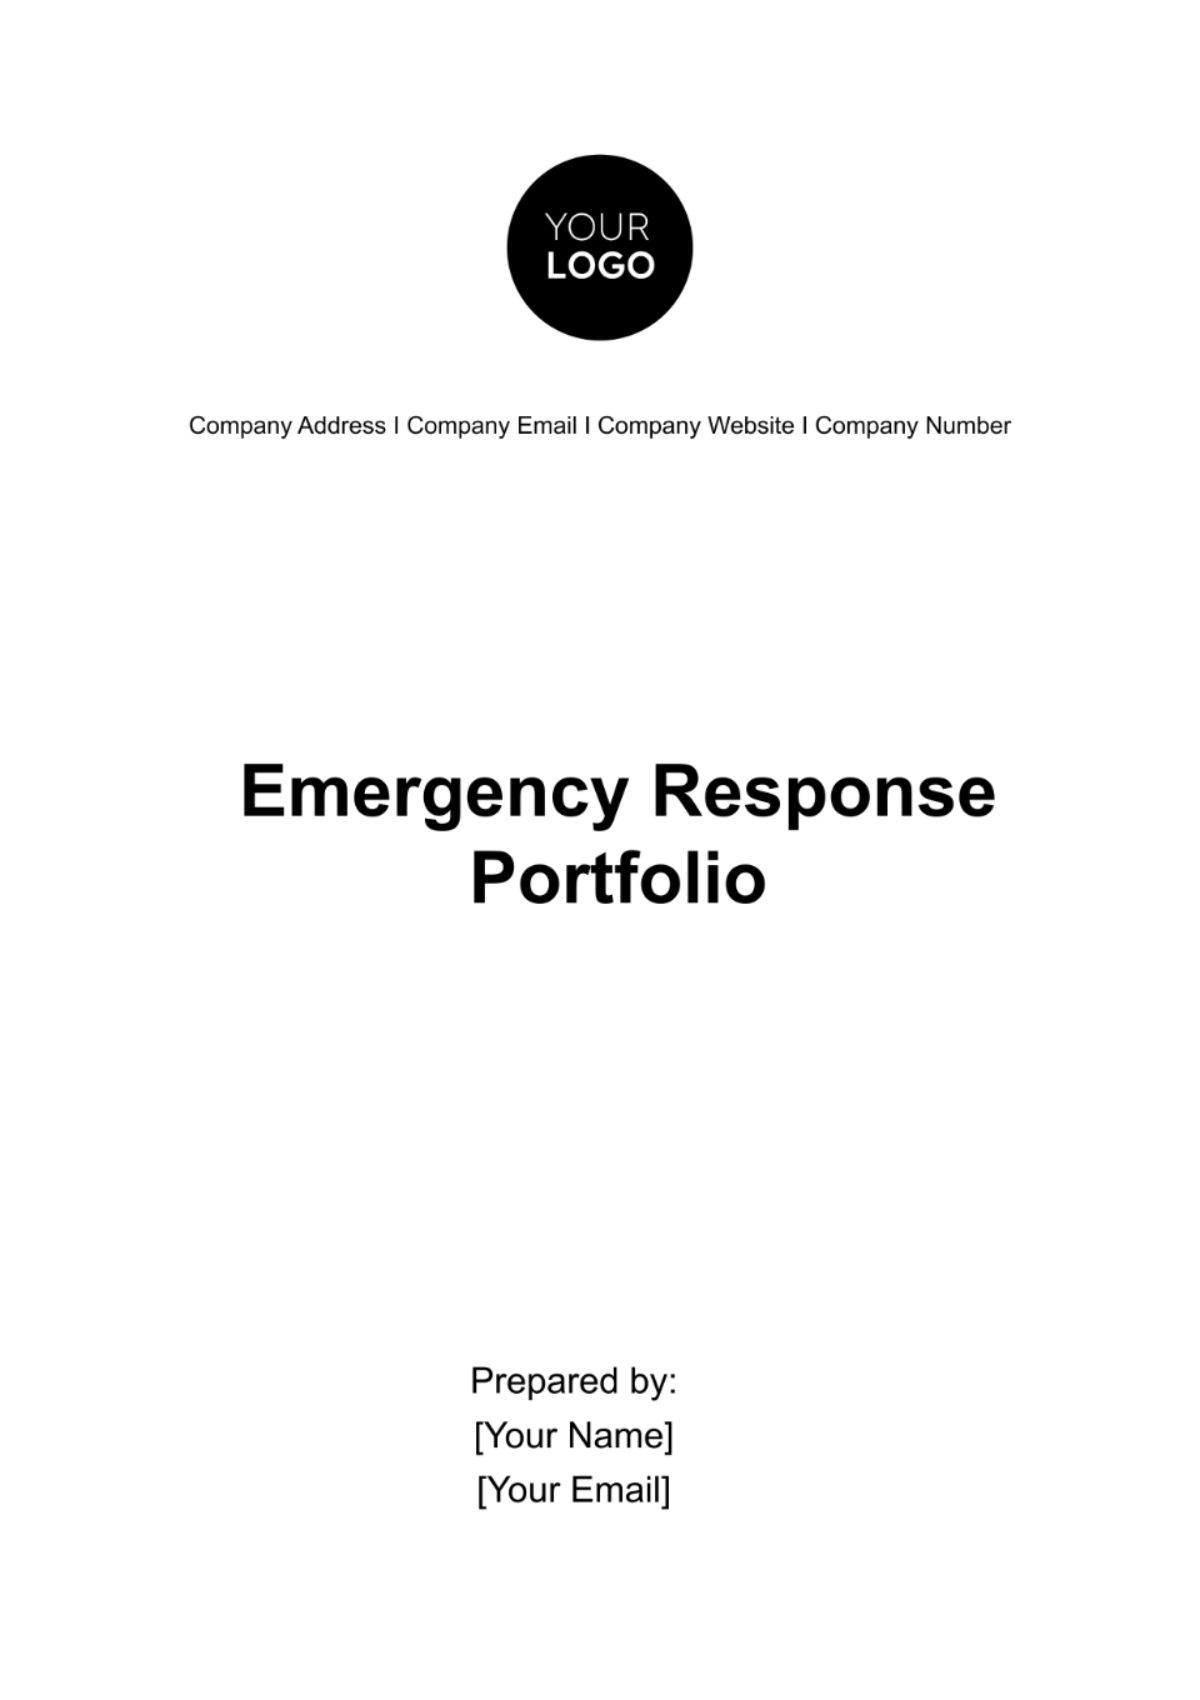 Emergency Response Portfolio Template